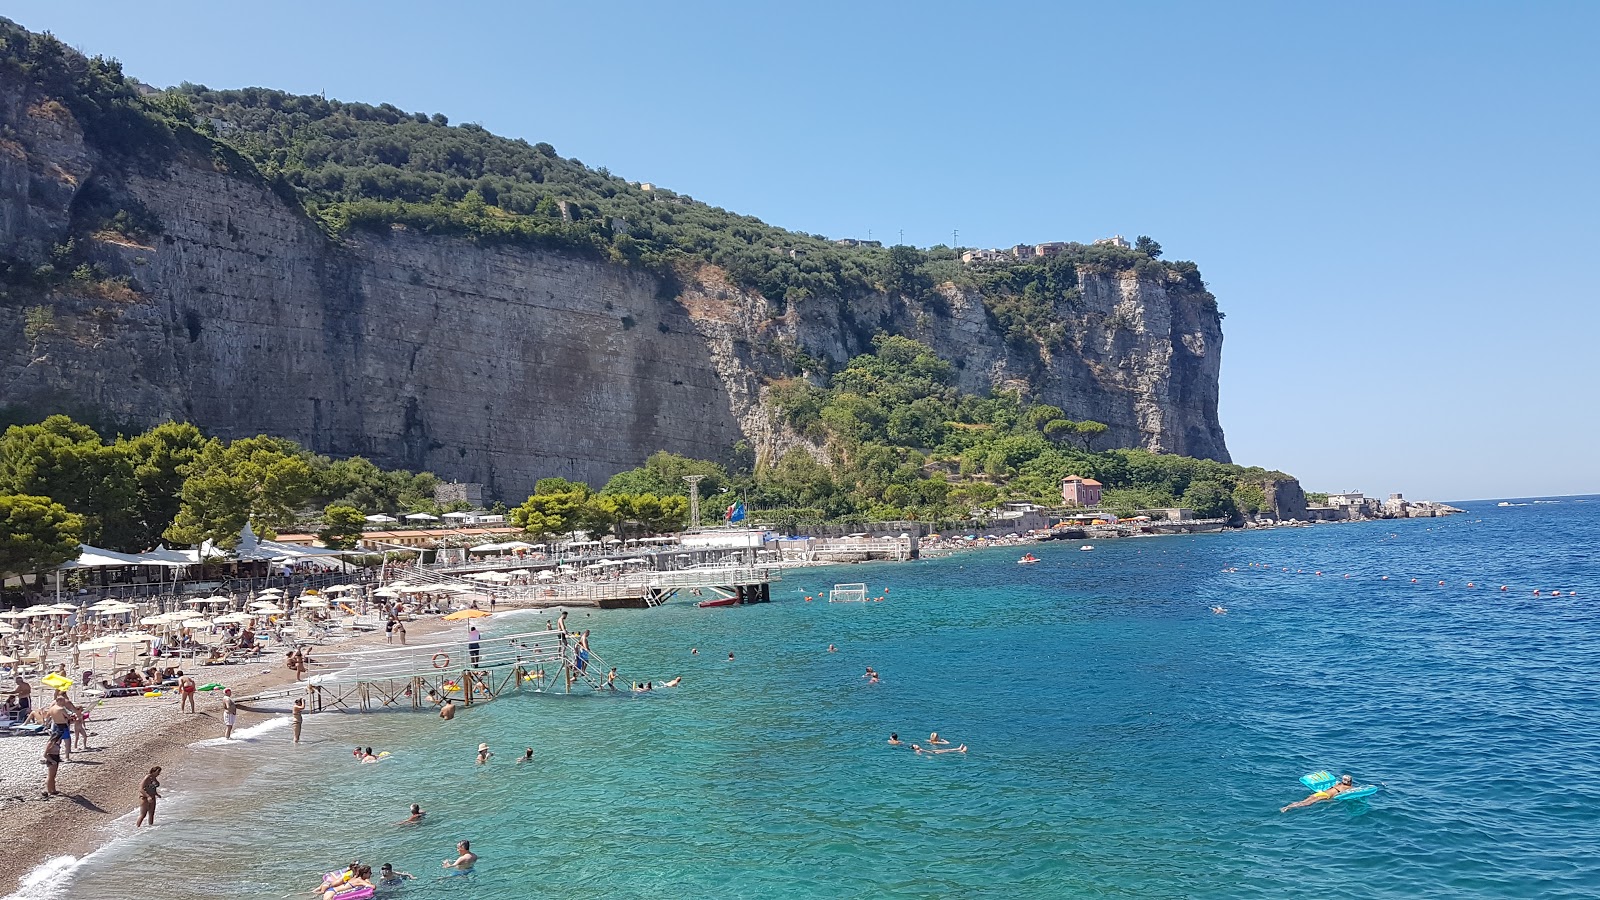 Fotografija Spiaggia Seiano z sivi fini kamenček površino